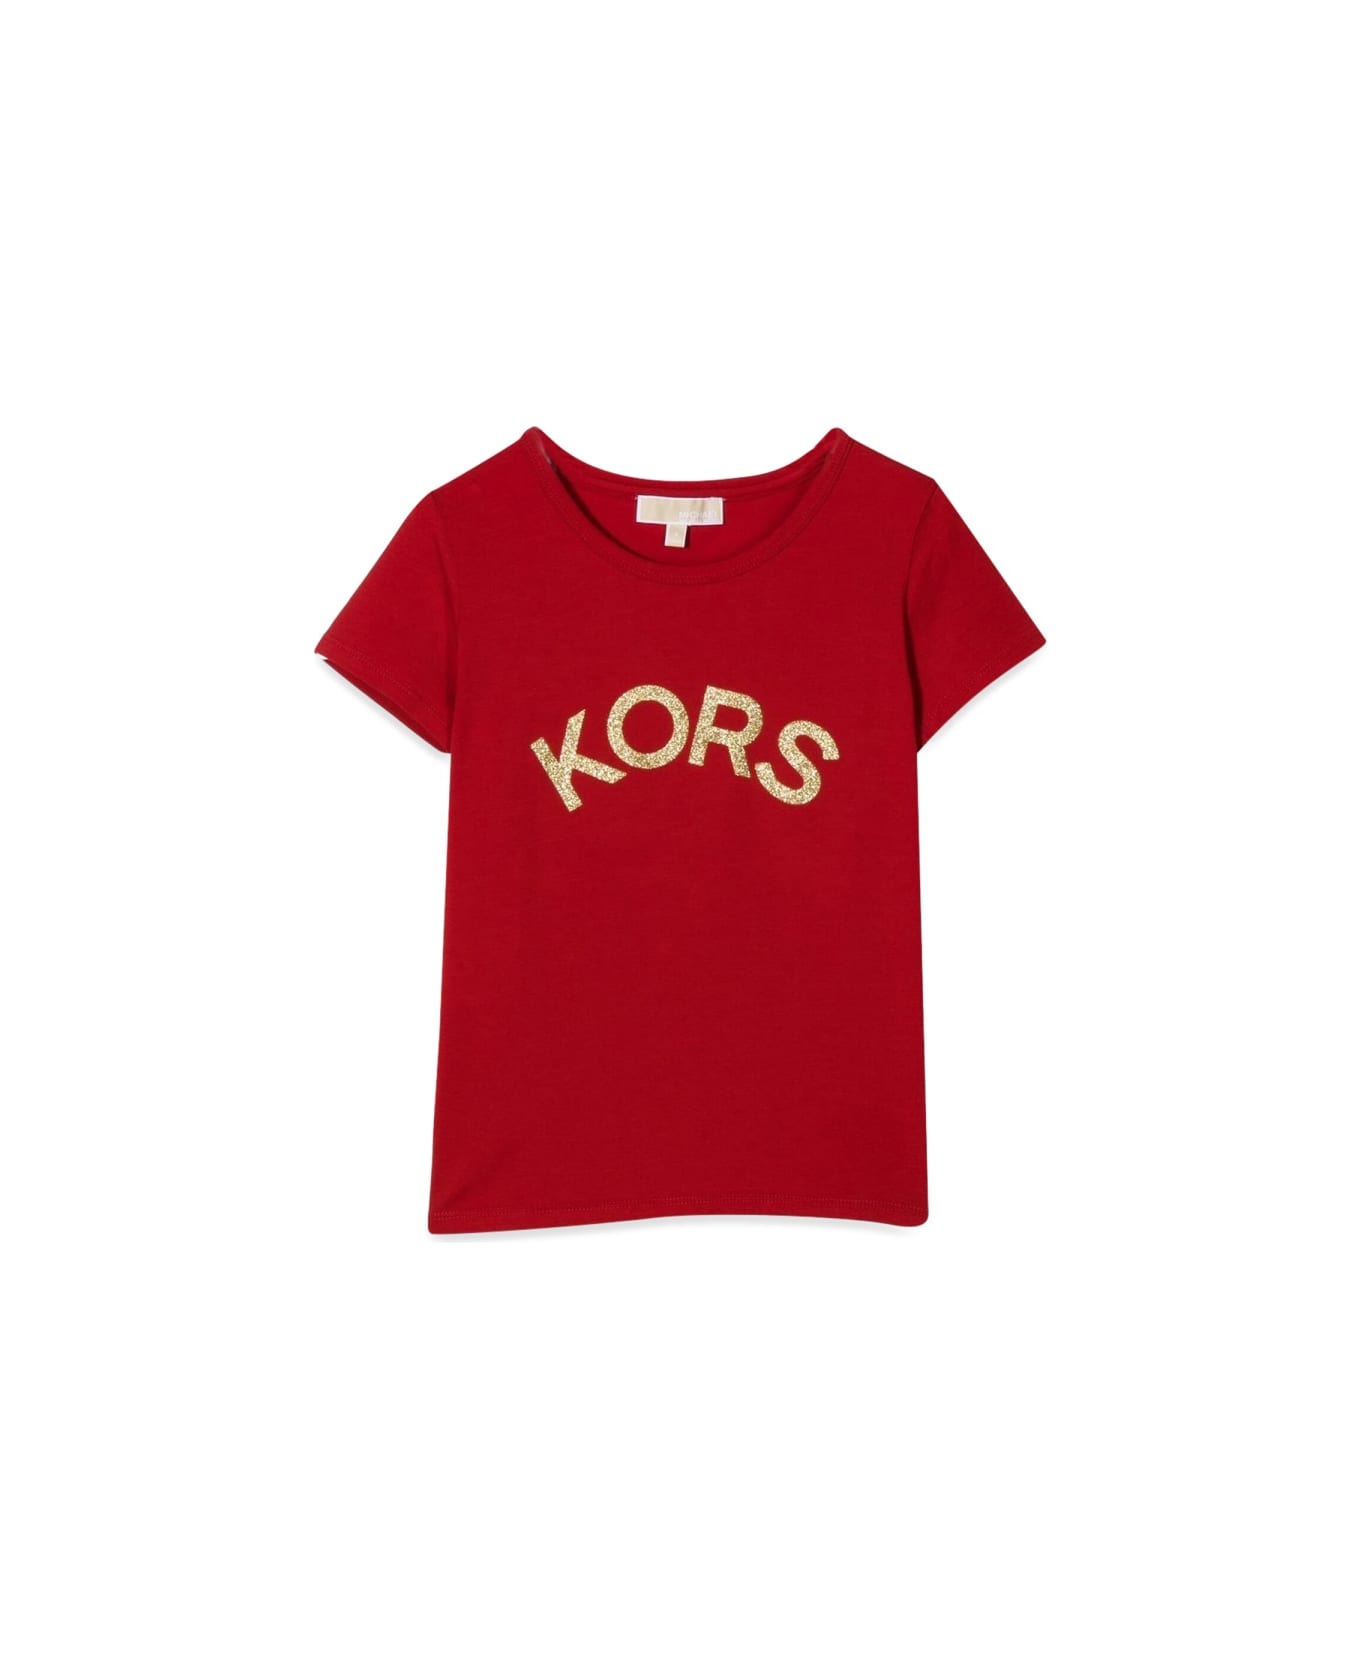 Michael Kors T-shirt Logo - RED